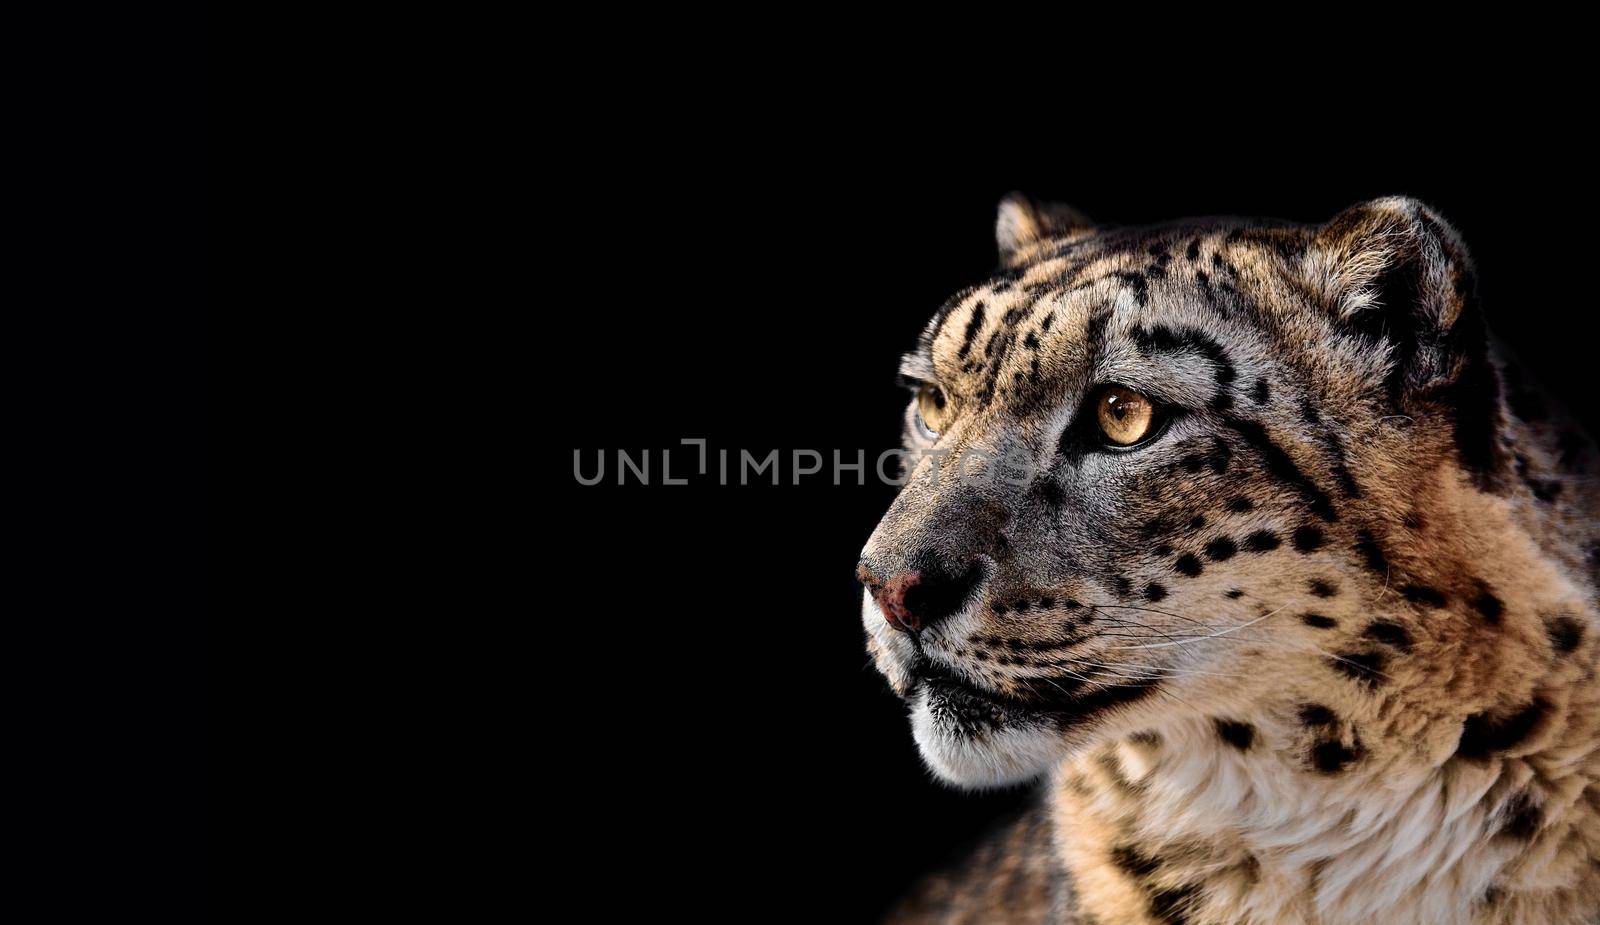 Beautiful Portrait of a Snow Leopard On black background. Portrait of a wild cat Irbis (Uncia uncia) by EvgeniyQW